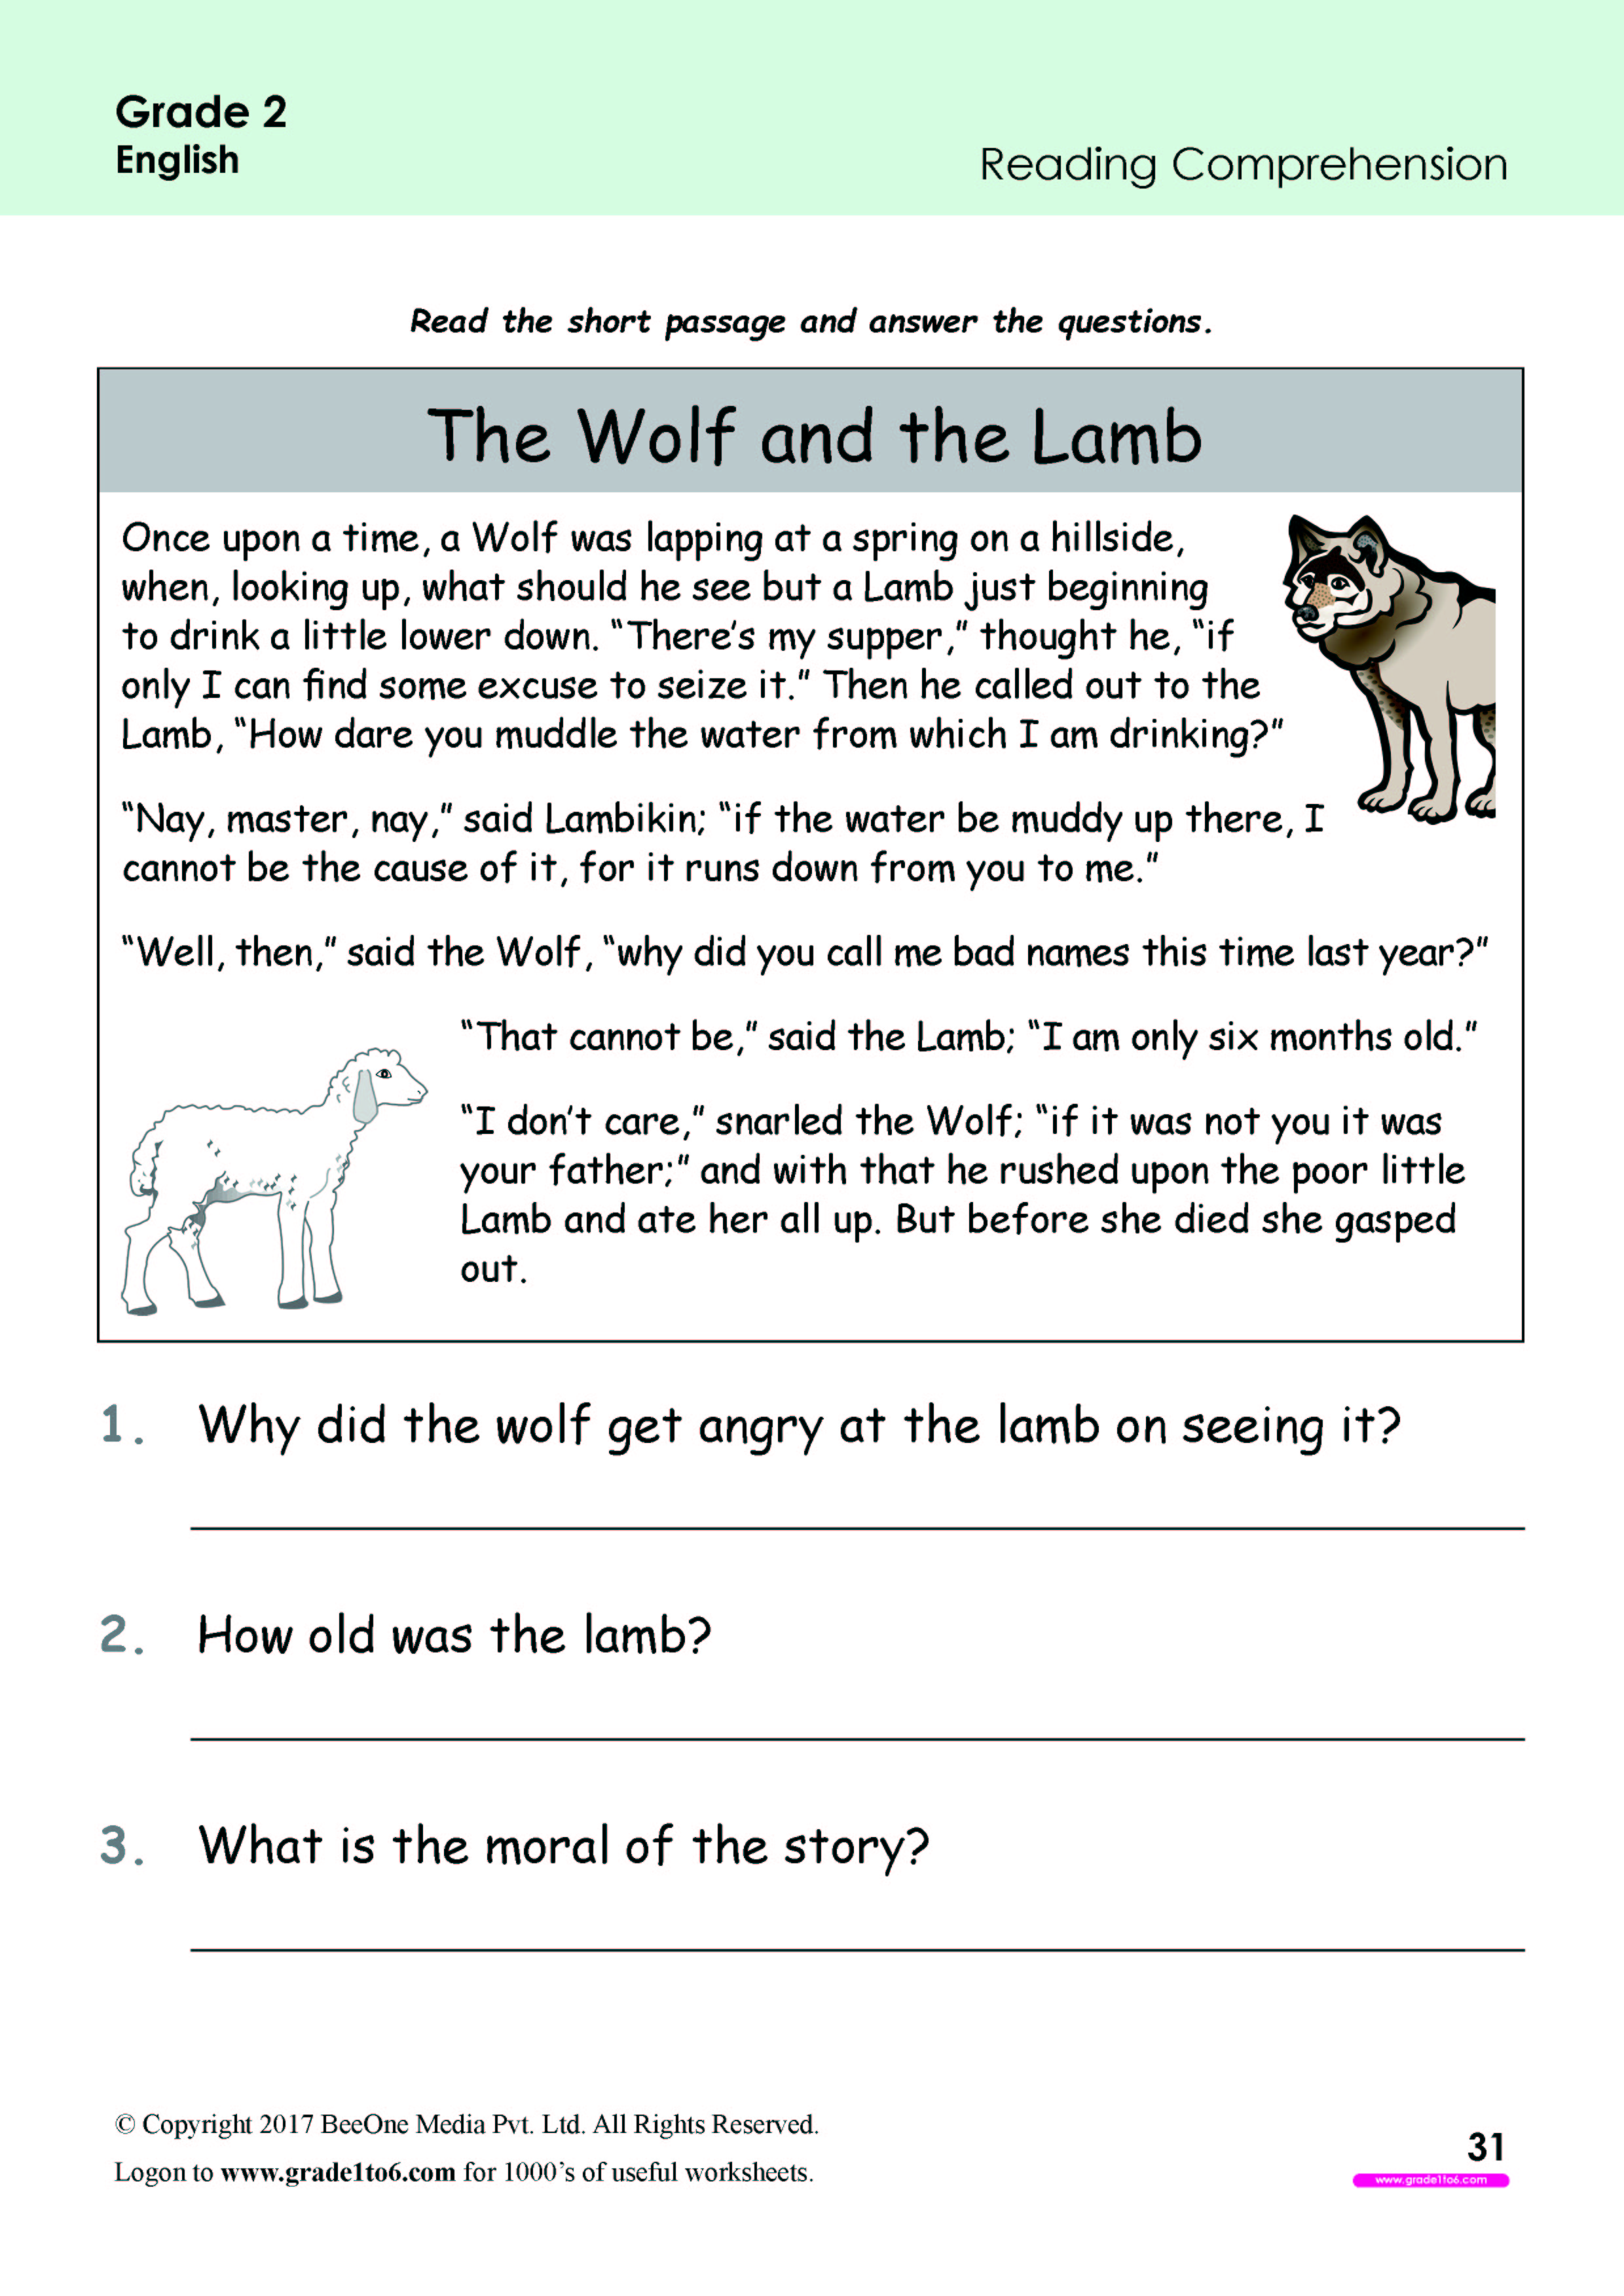 Reading Comprehension Worksheets Free Printable 2nd Grade